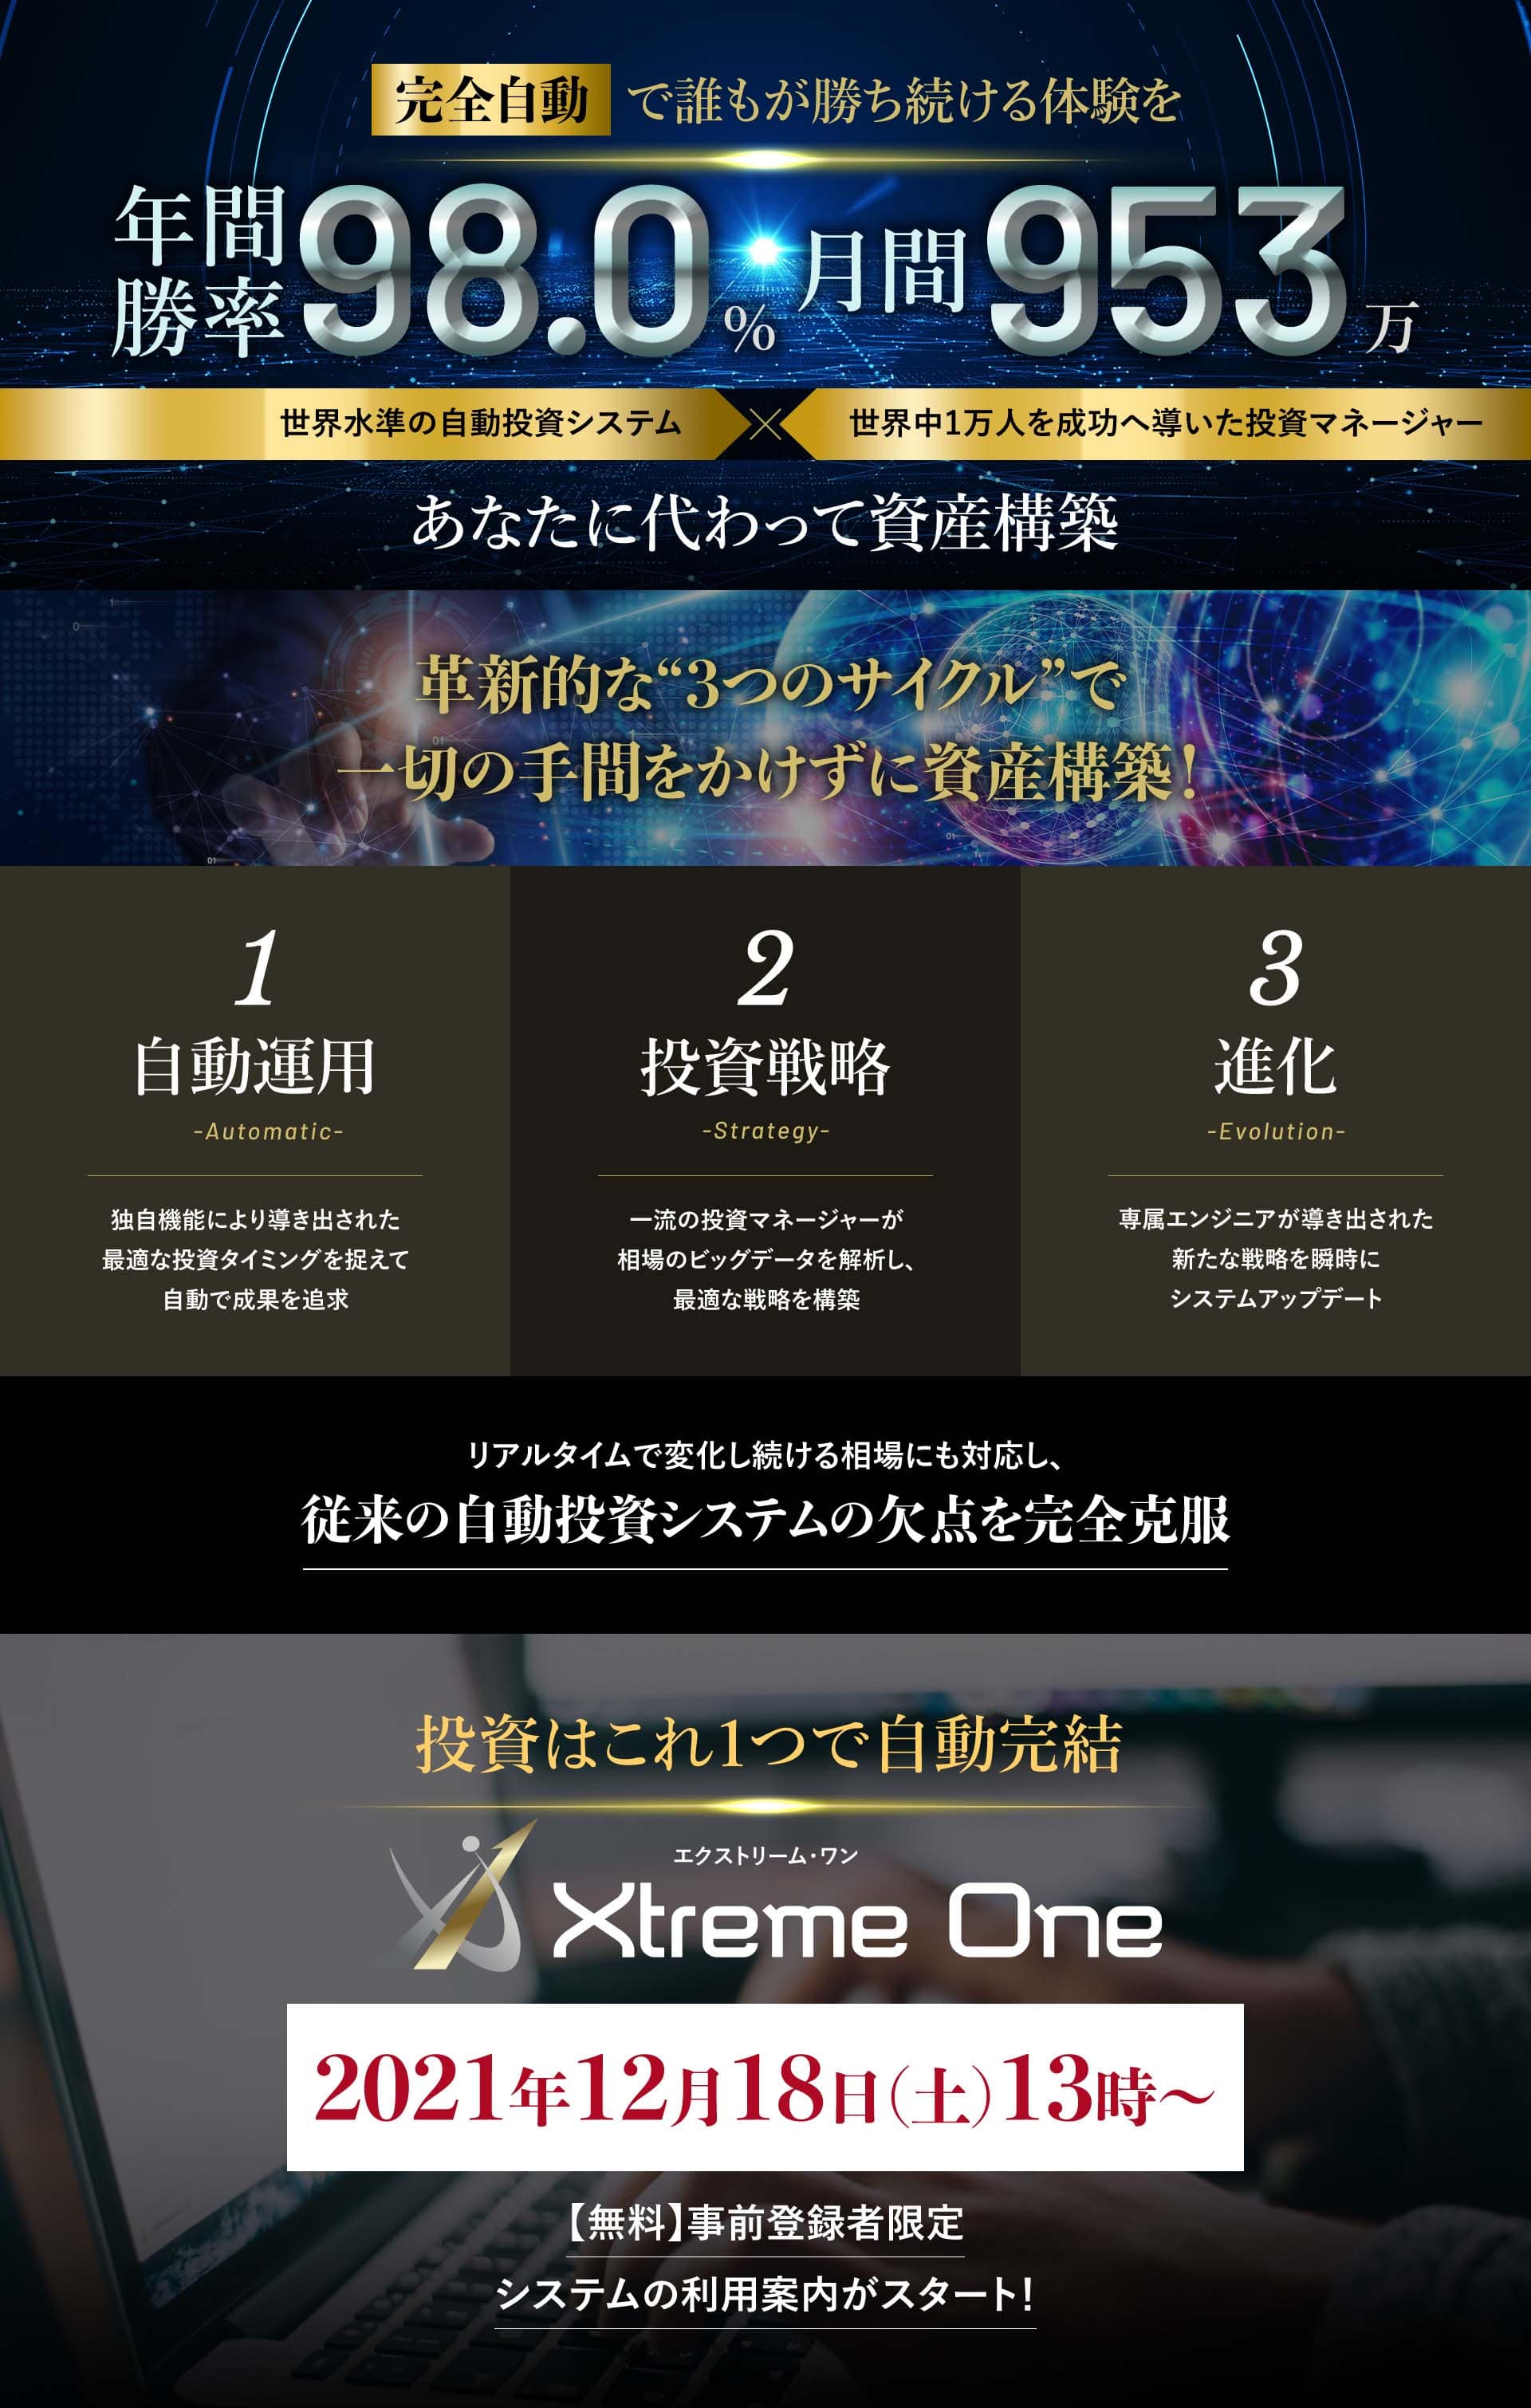 Xtreme One